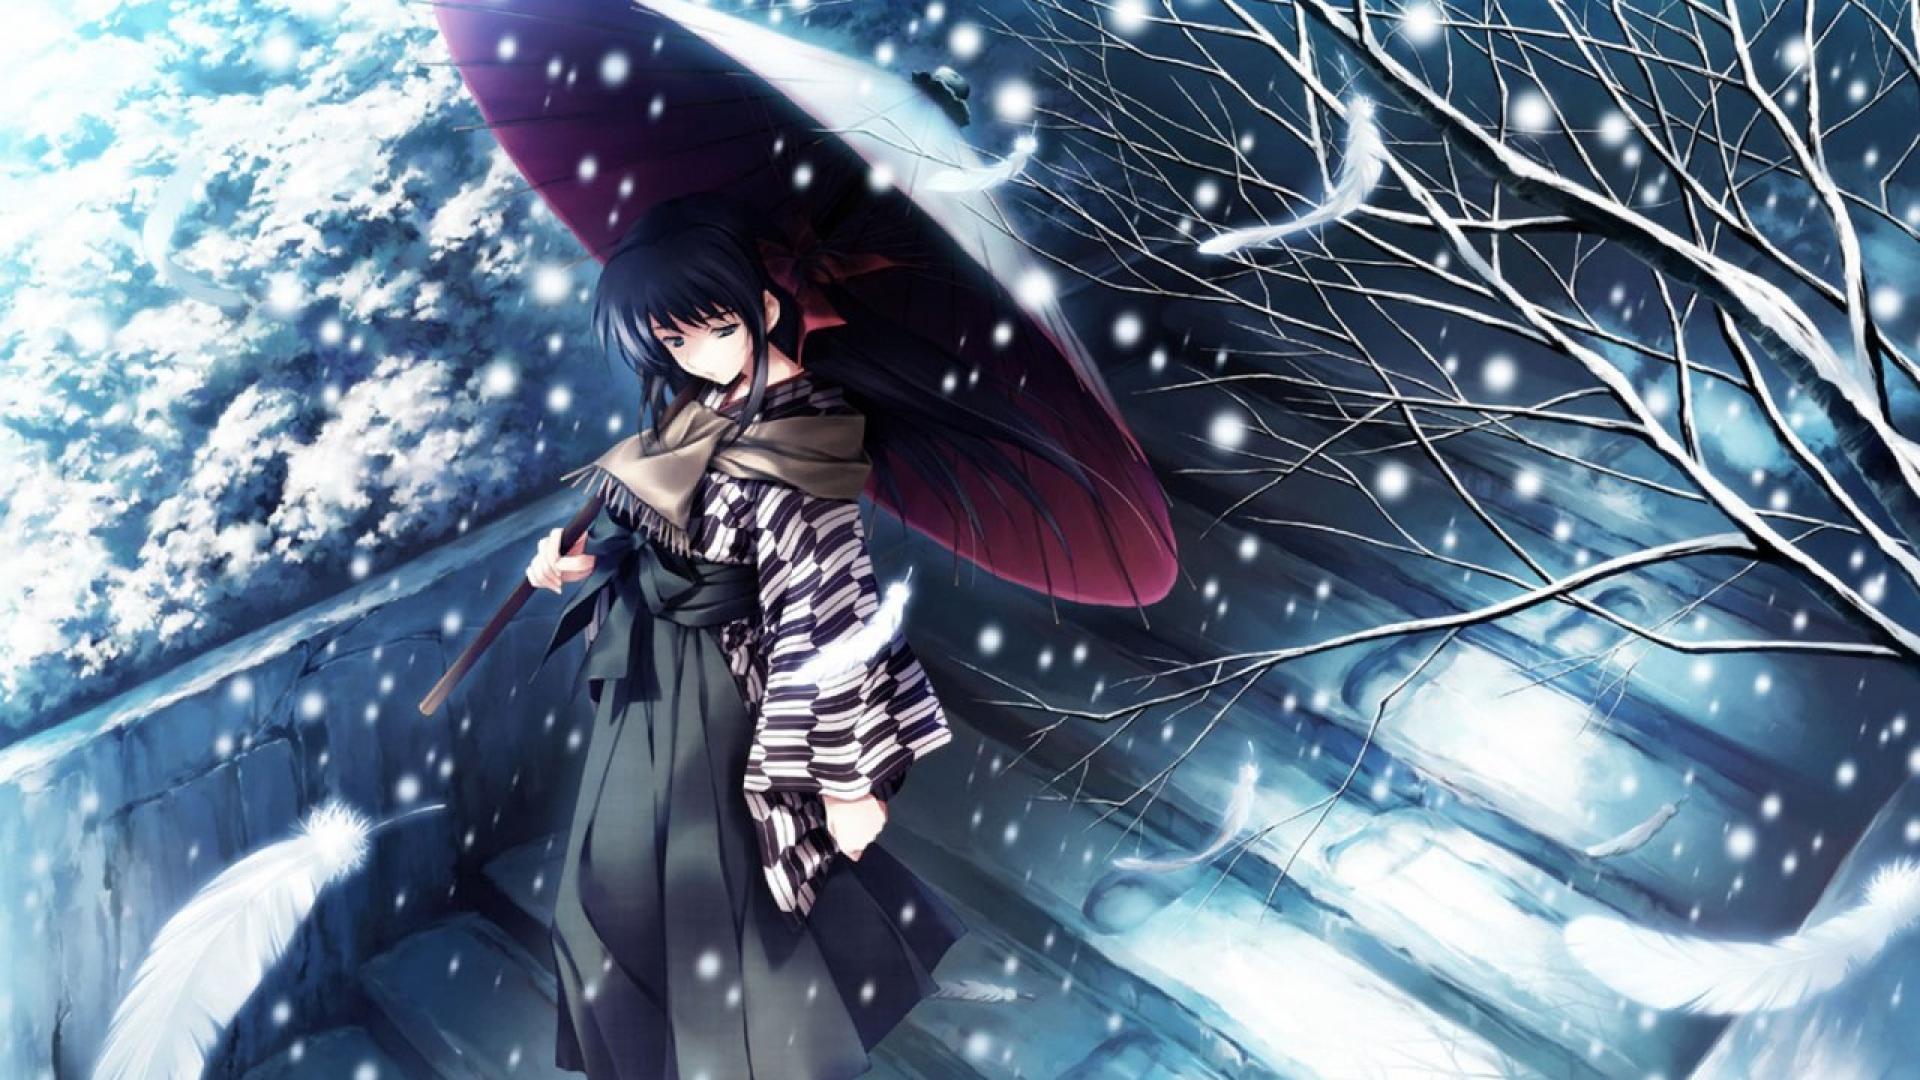 Winter Girl Anime Wallpaper HD Download Free